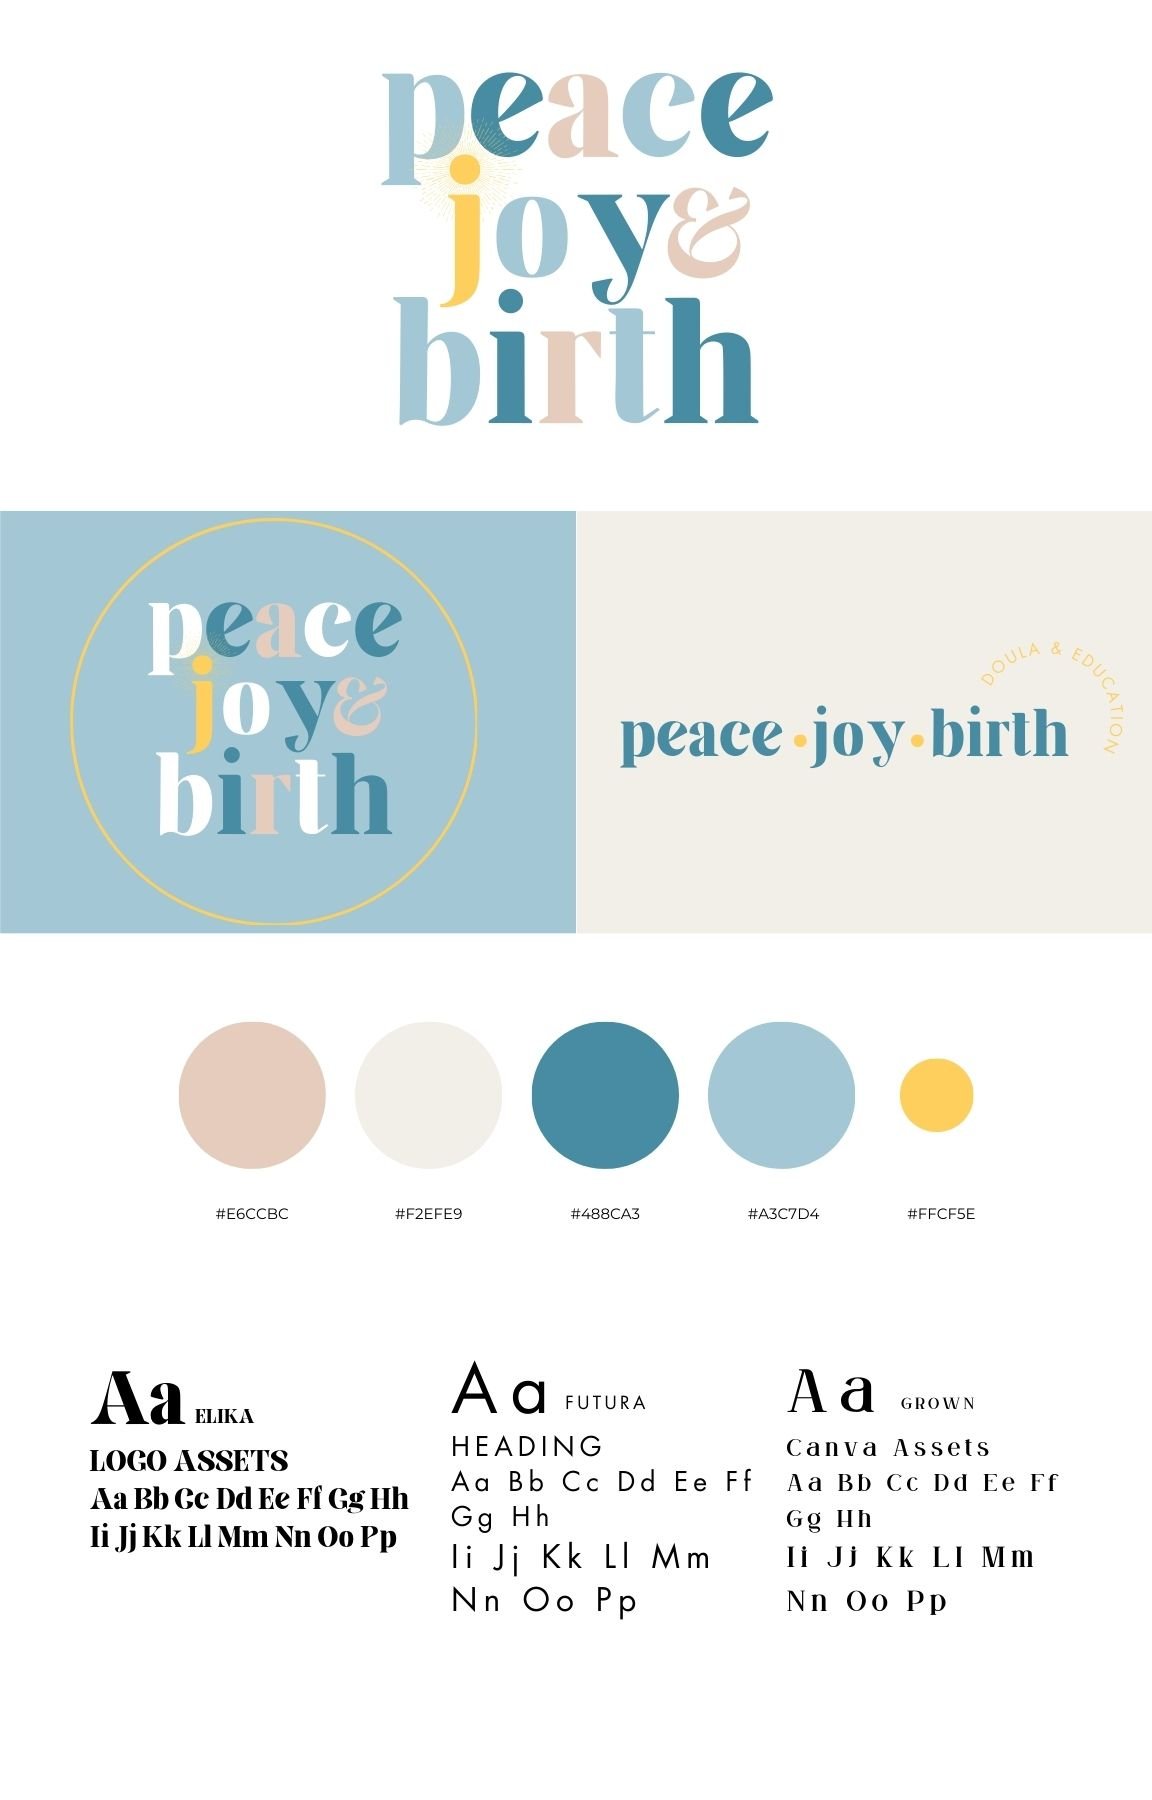 Final Peace&Joy Birth.jpg